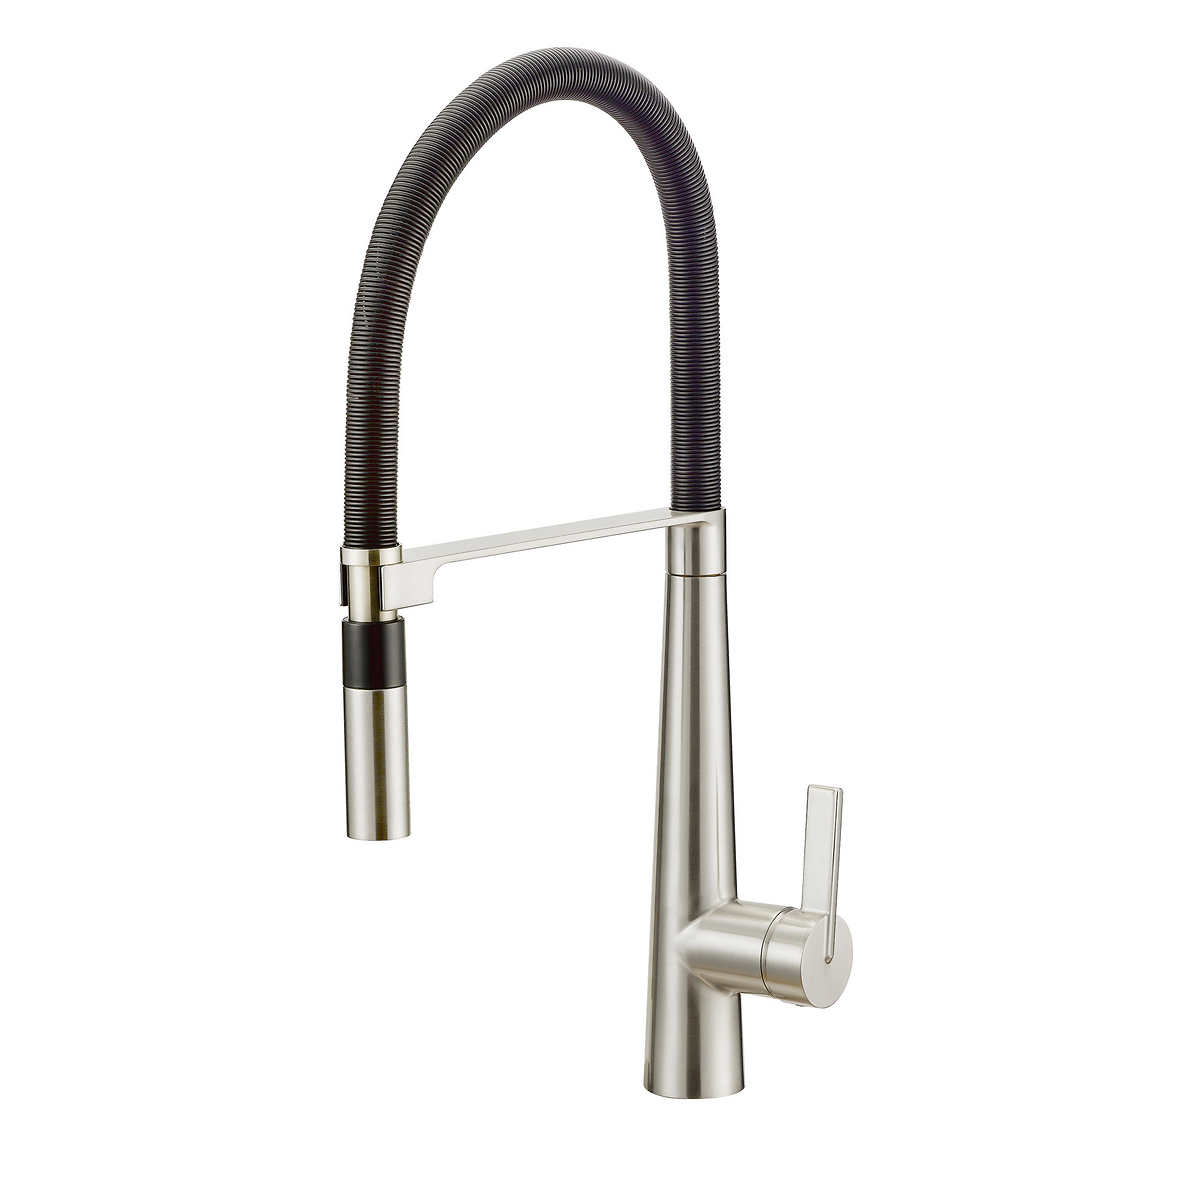 WaterRidge Capo Commercial Pull Down Kitchen Faucet